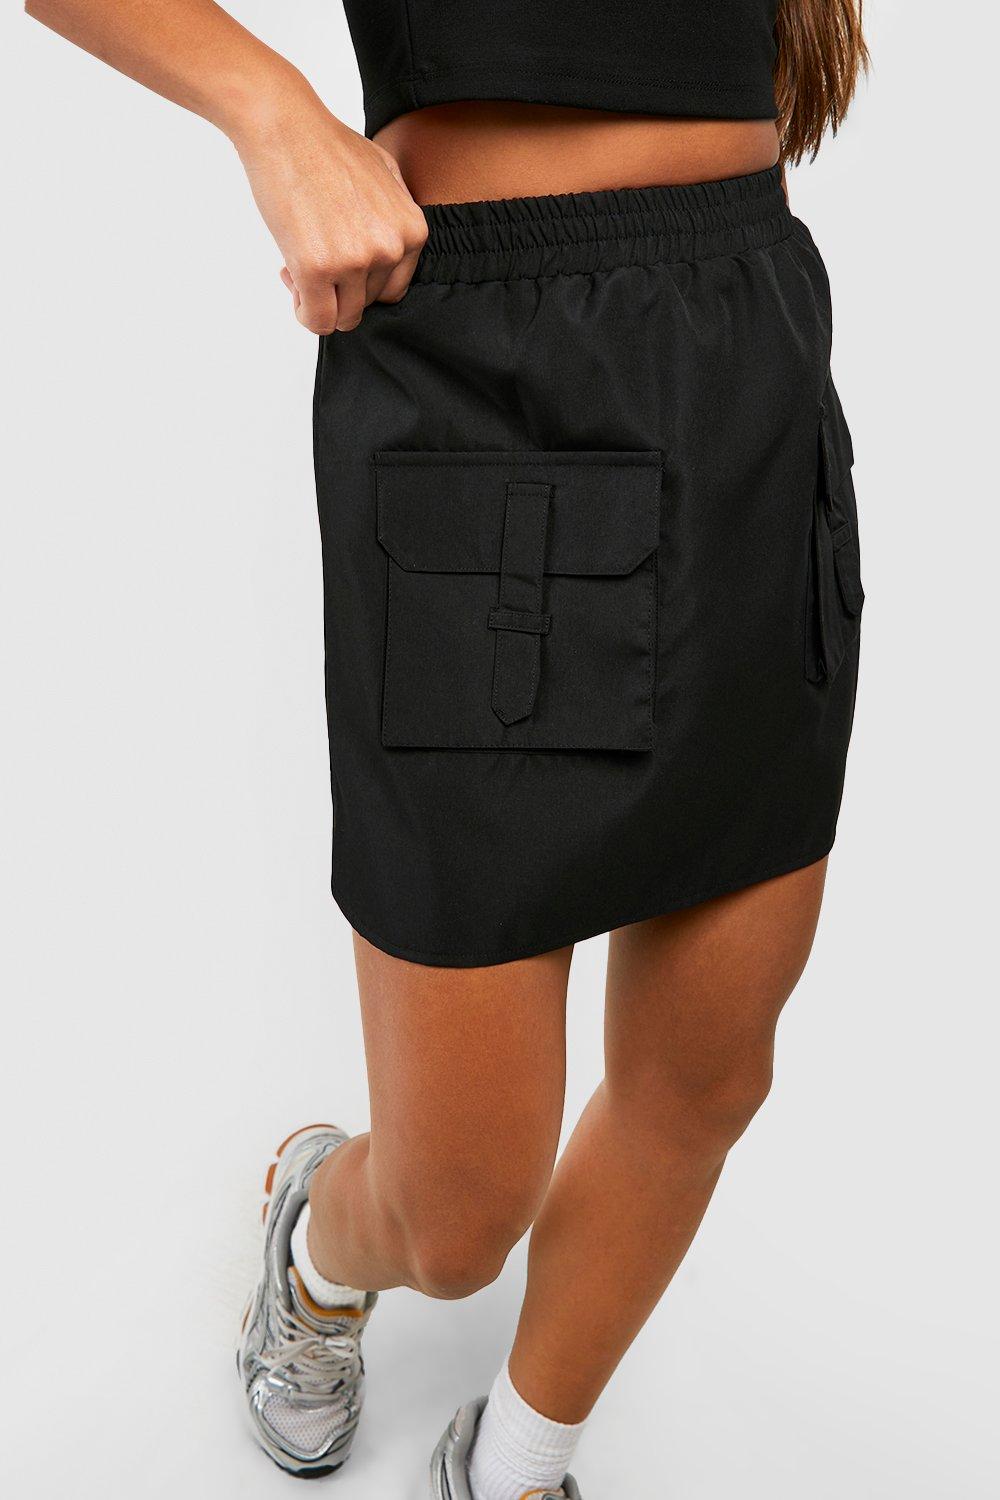 Splendid Black Micro Mini Skirt elastic waist attached shorts